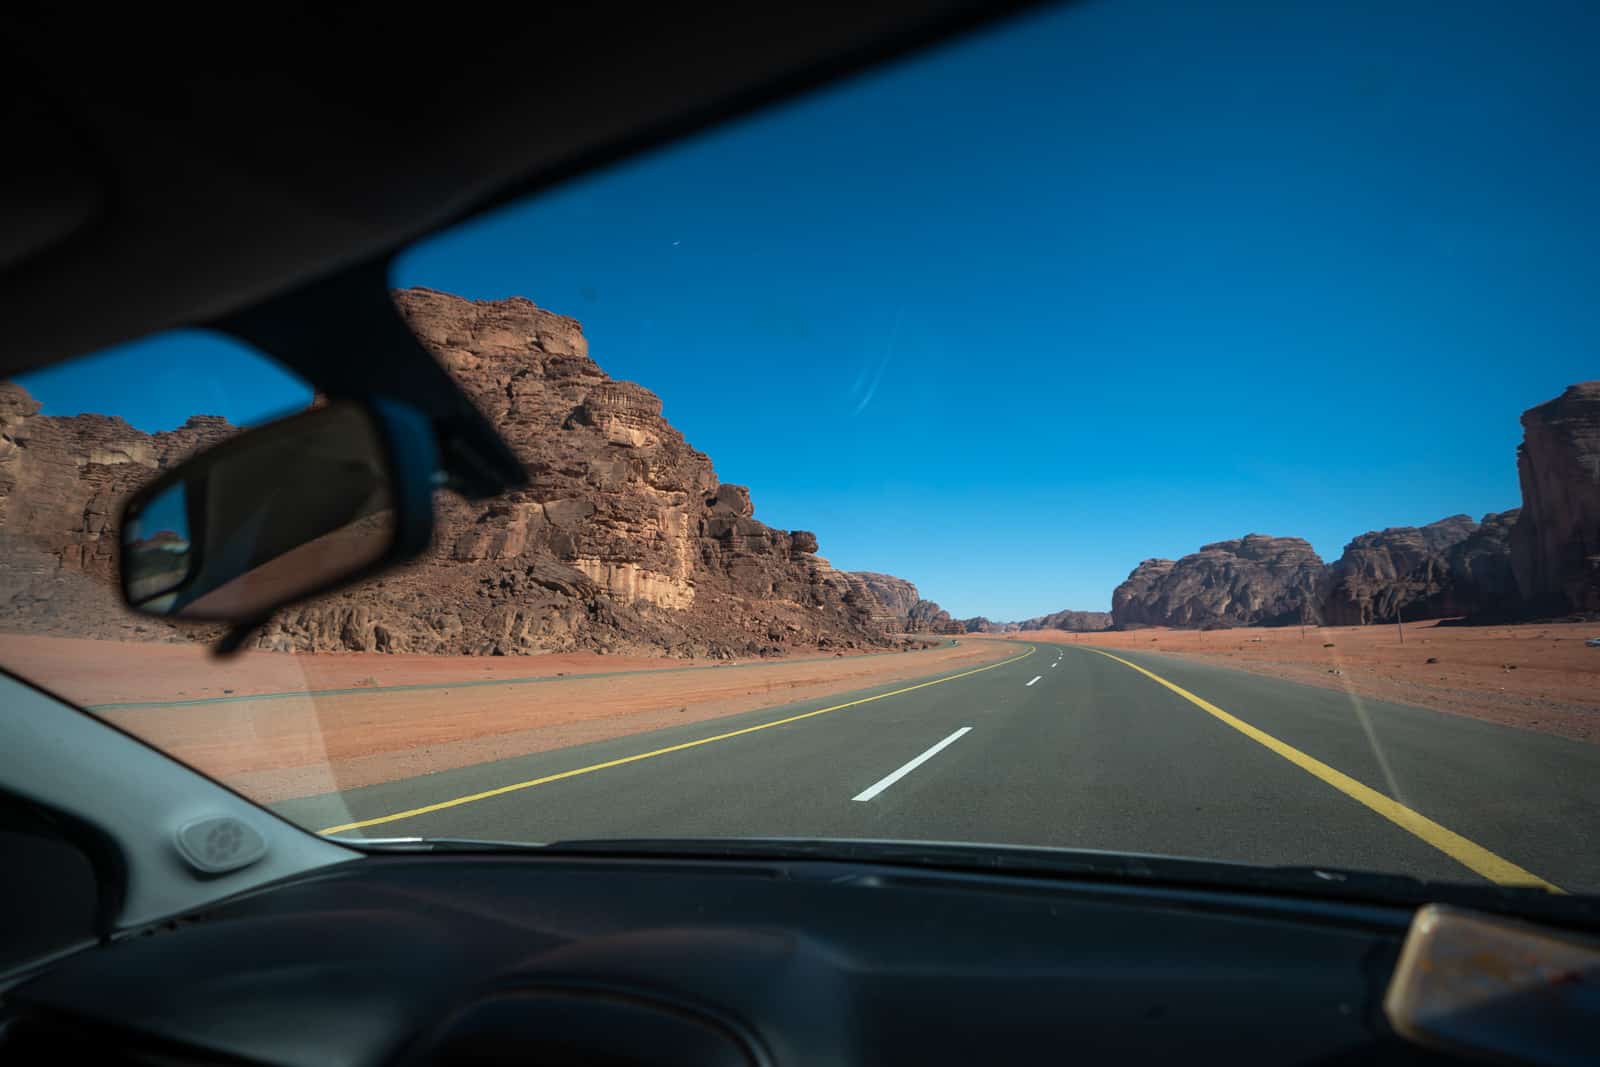 Traveling by car in the Tabuk region of Saudi Arabia